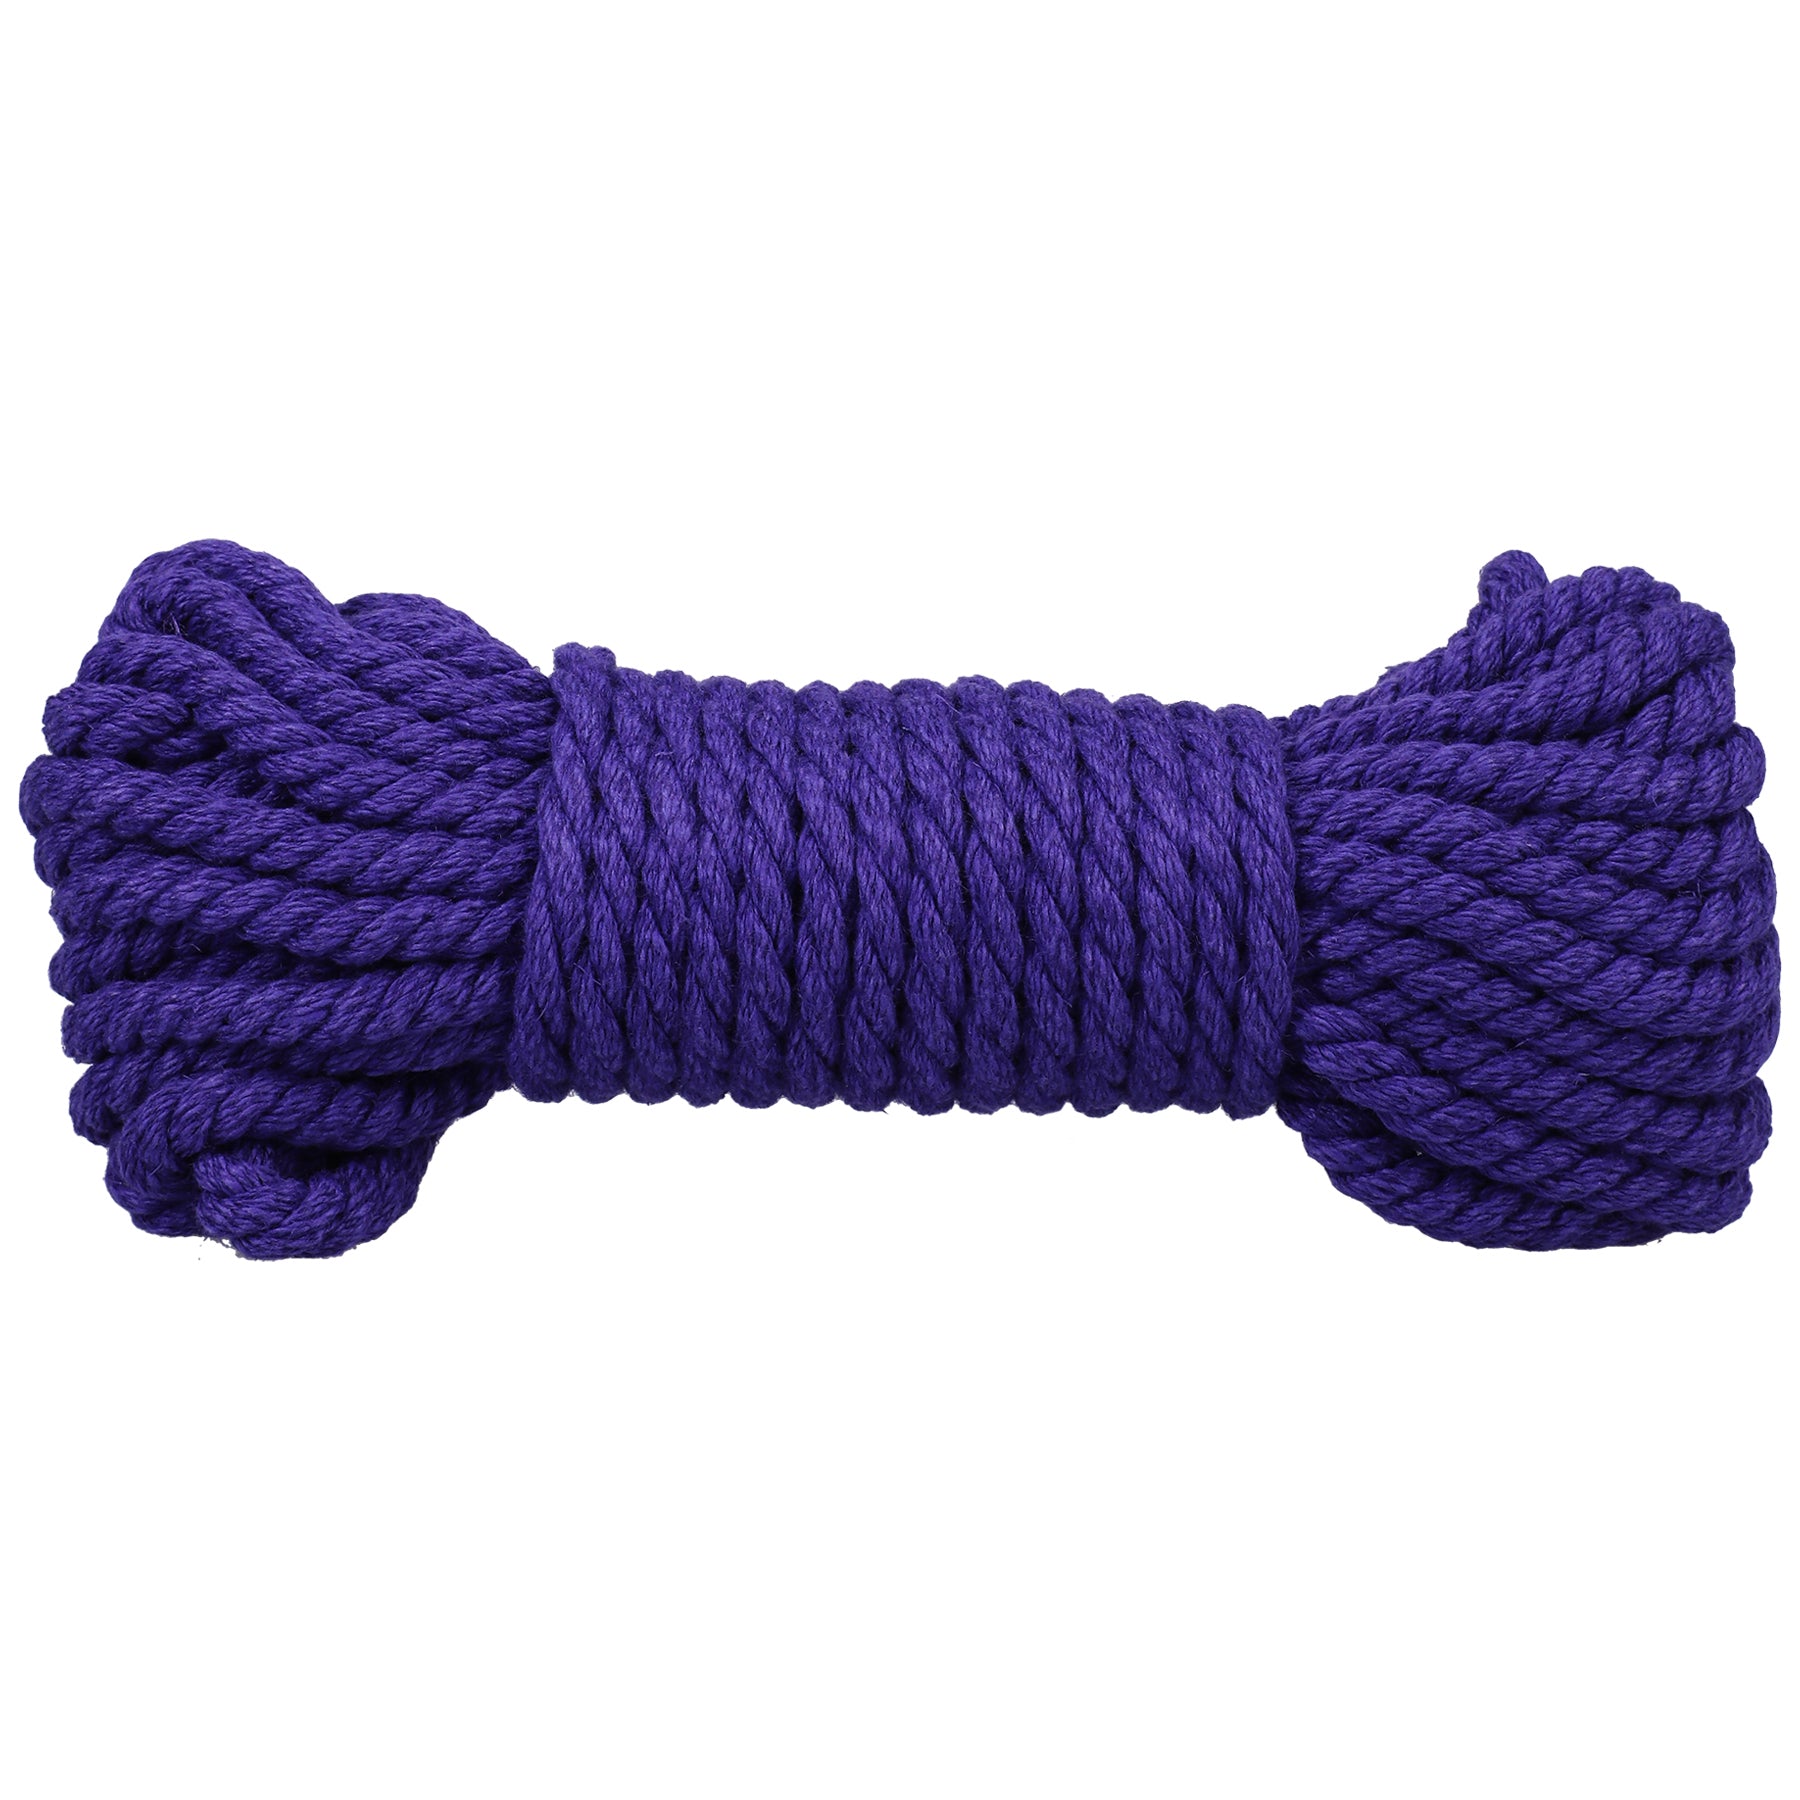 Merci - Bind and Tie - 6mm Hemp Bondage Rope - 30  Feet - Violet-1